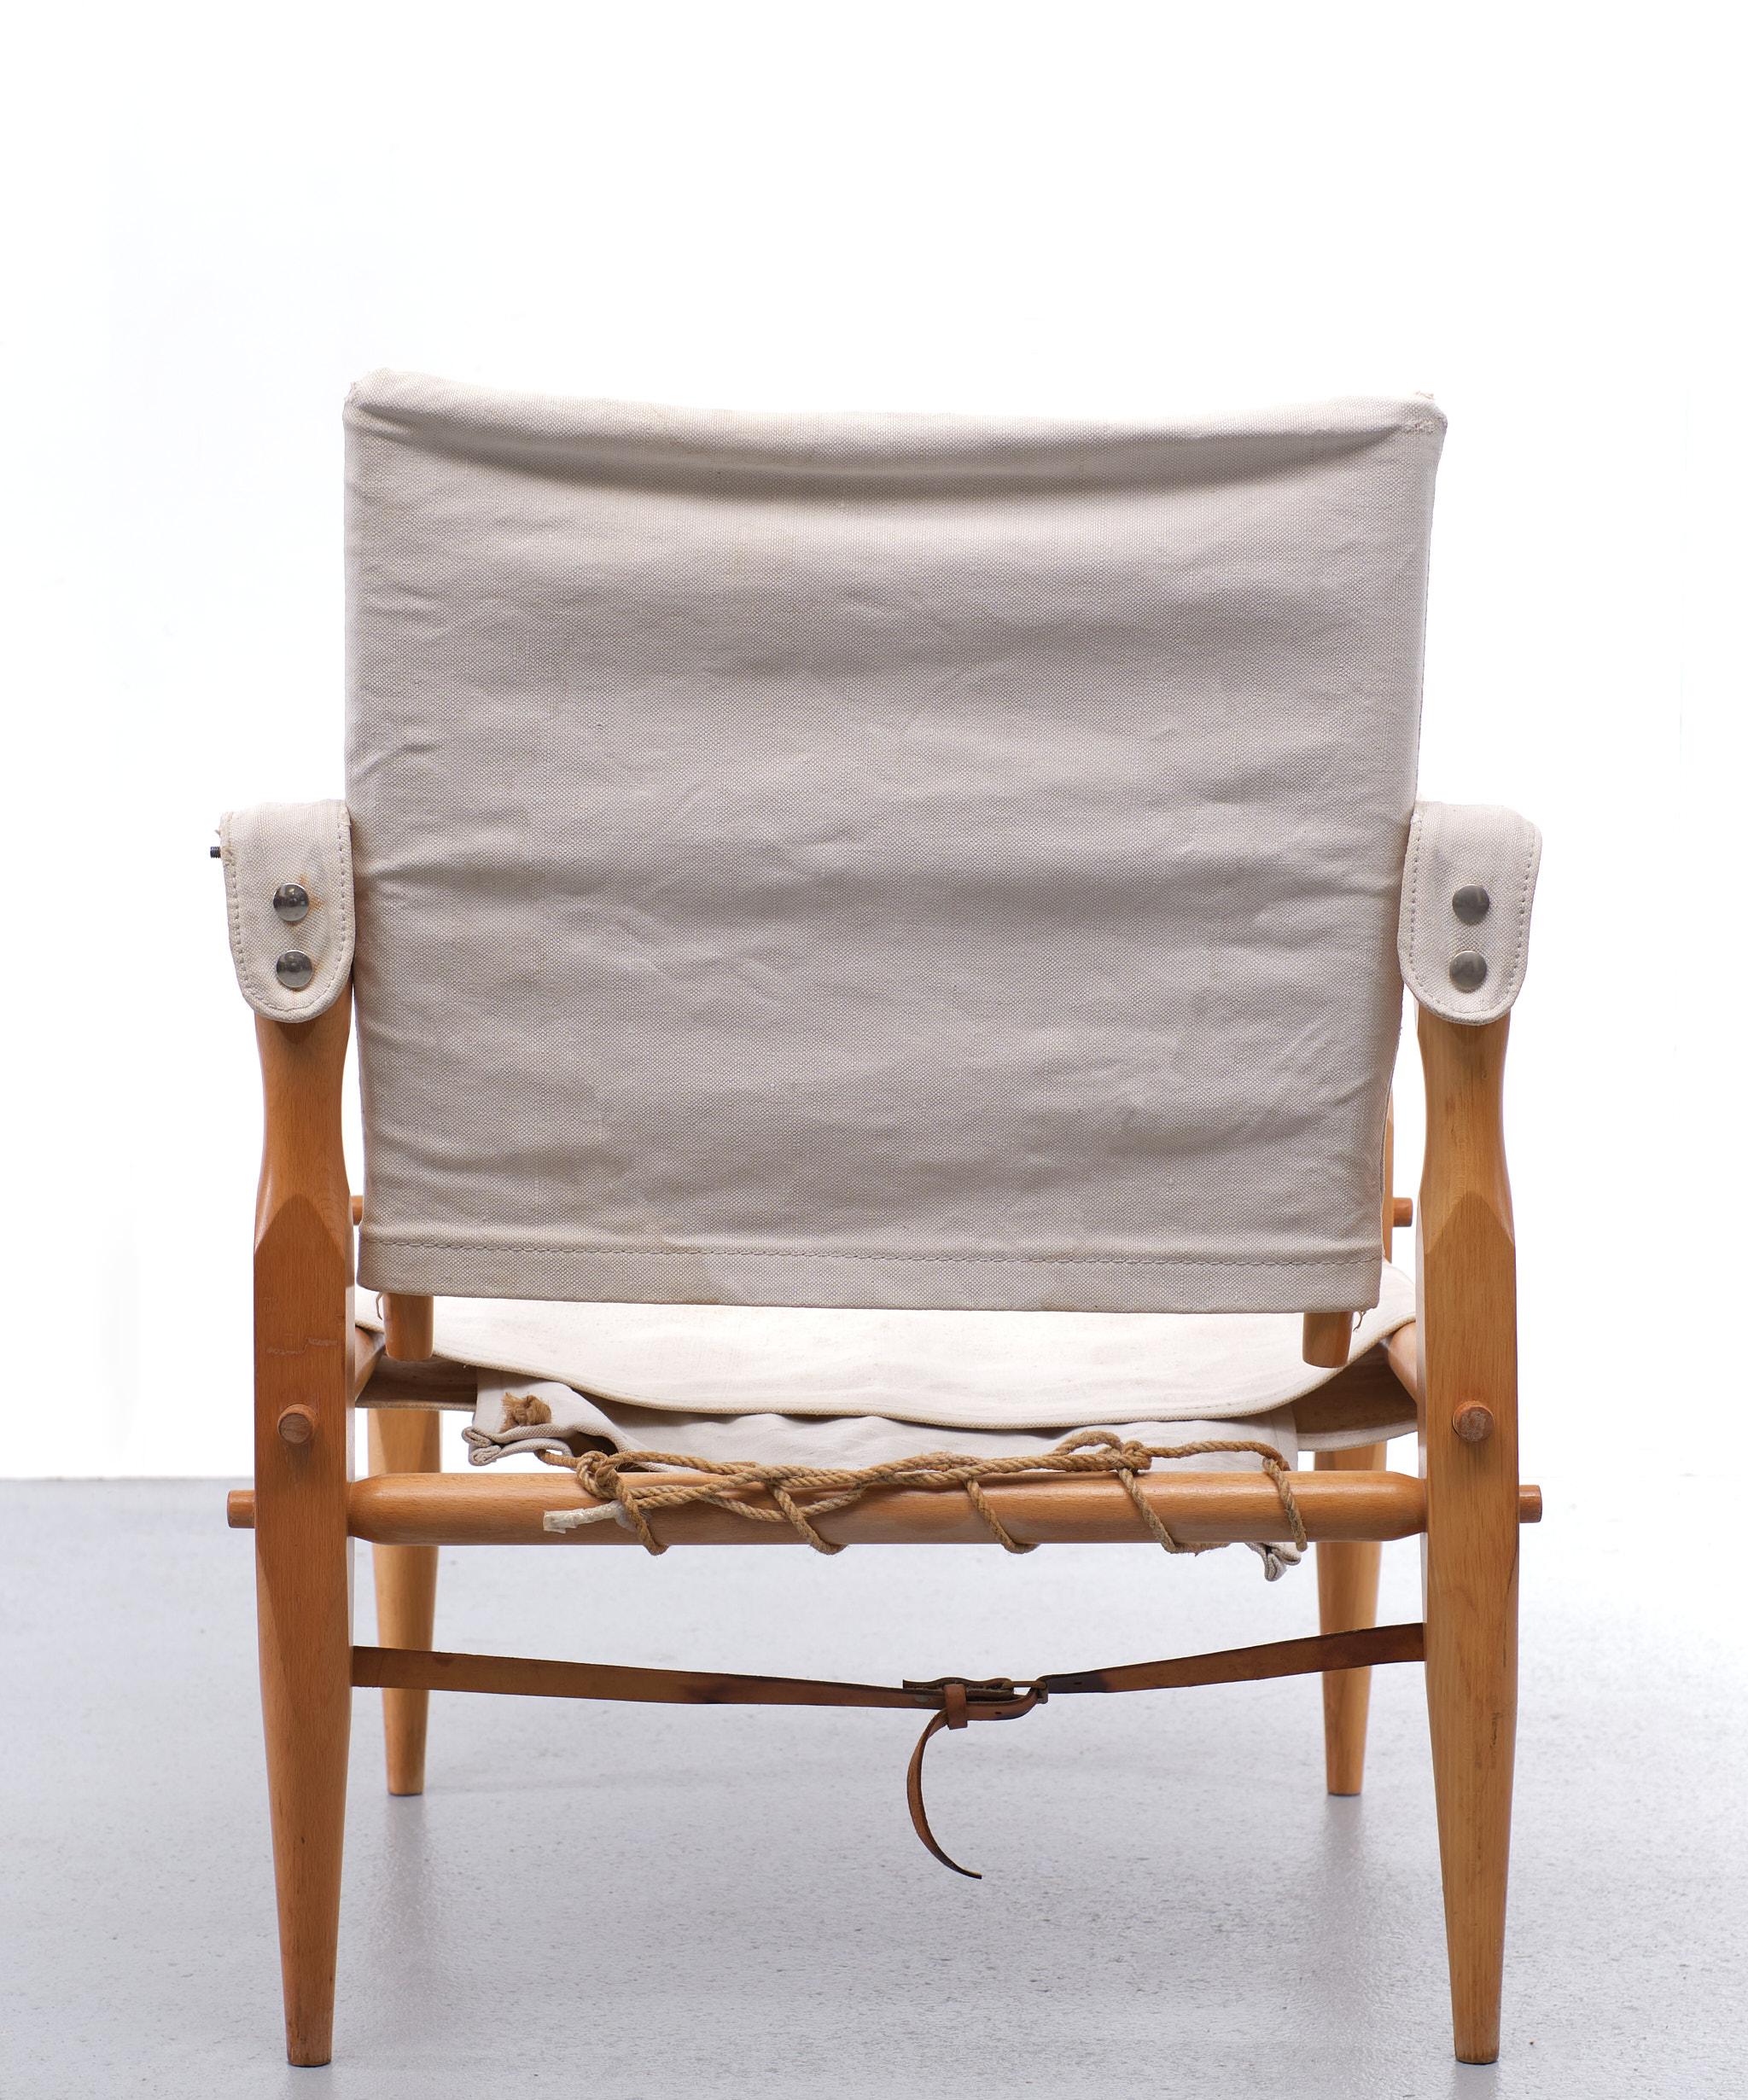 Vintage safari chair 1960s Denmark For Sale 2